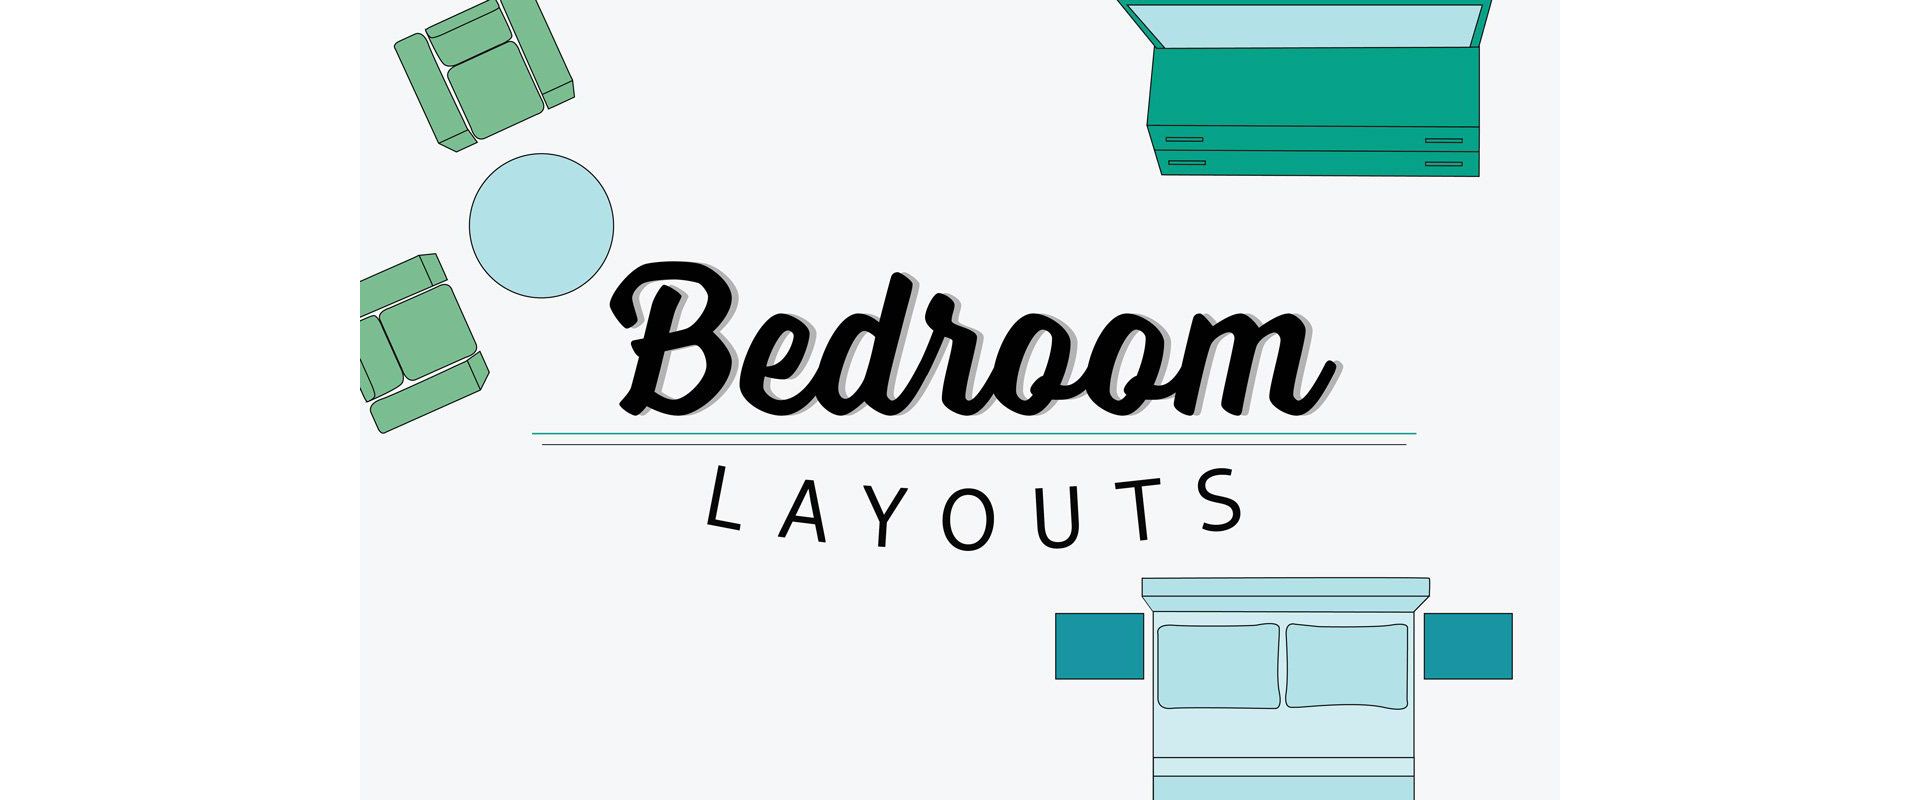 Bedroom Layouts